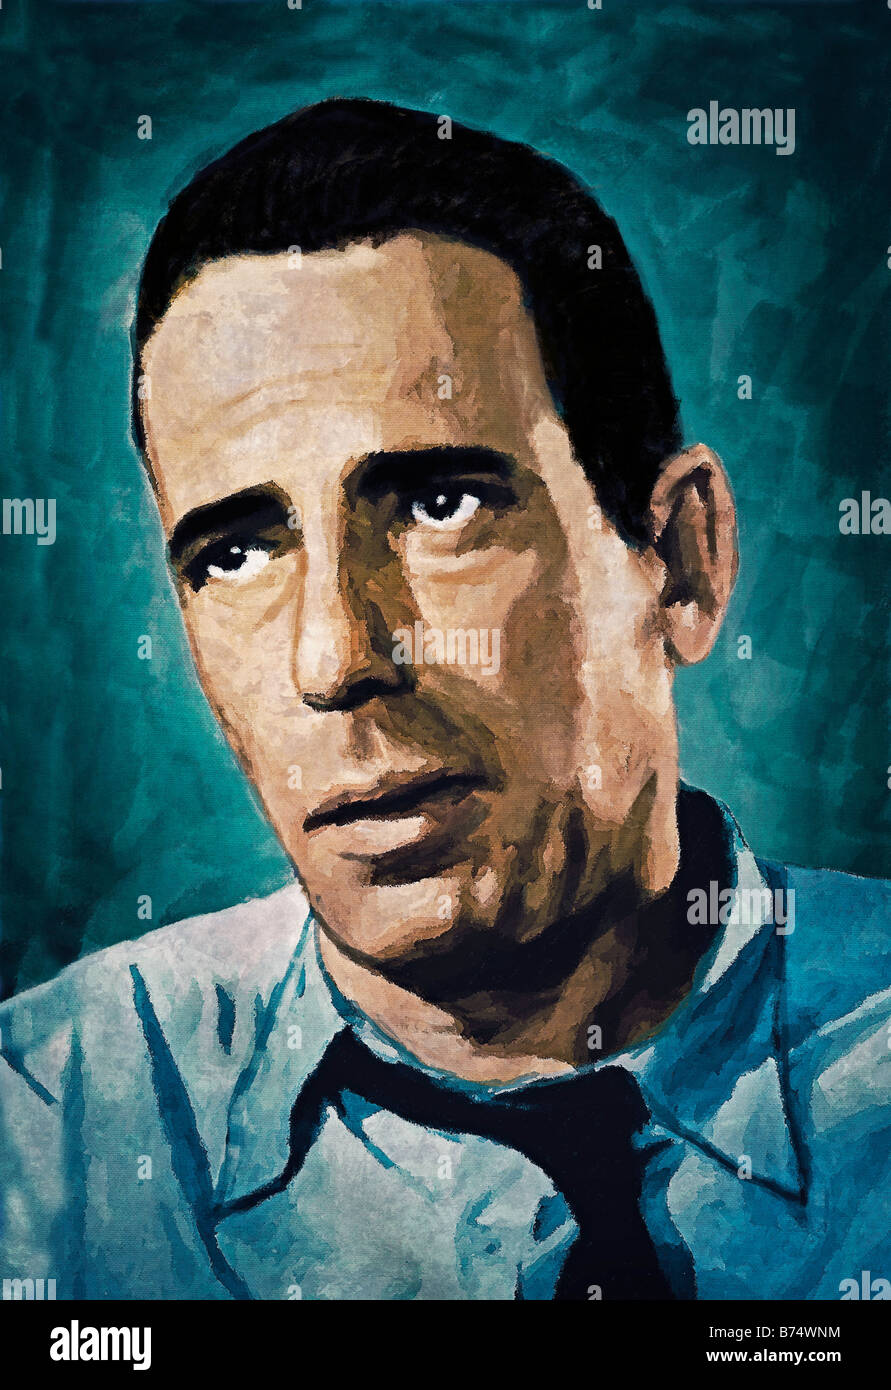 Humphrey Bogart digital media painting Stock Photo